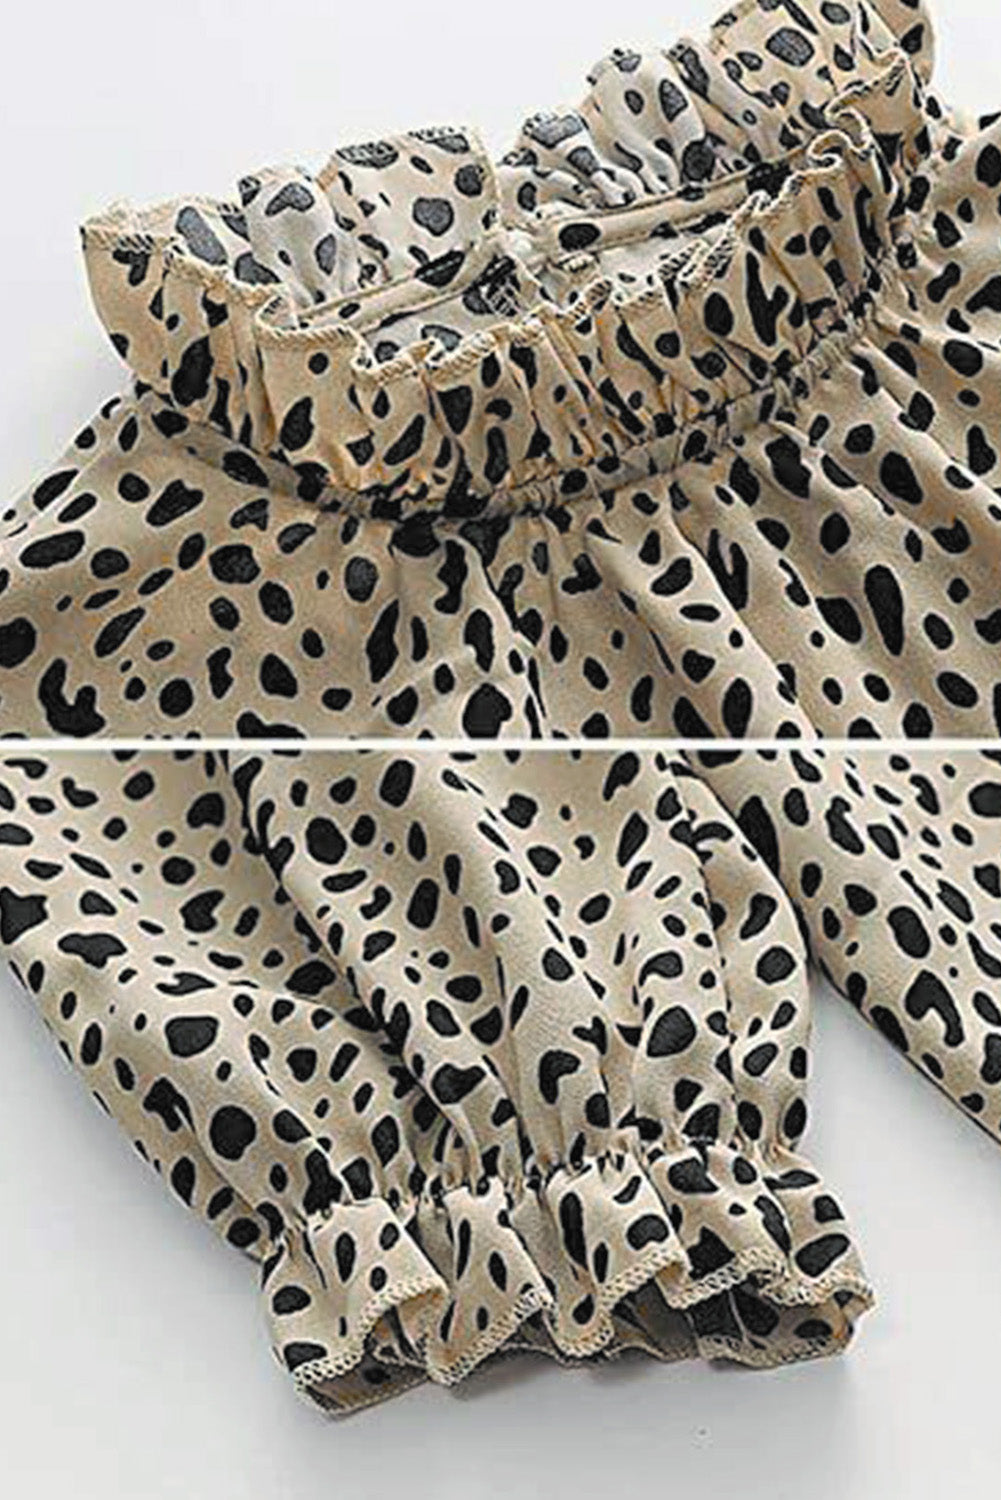 Khaki Frilled Neck 3/4 Sleeves Cheetah Blouse